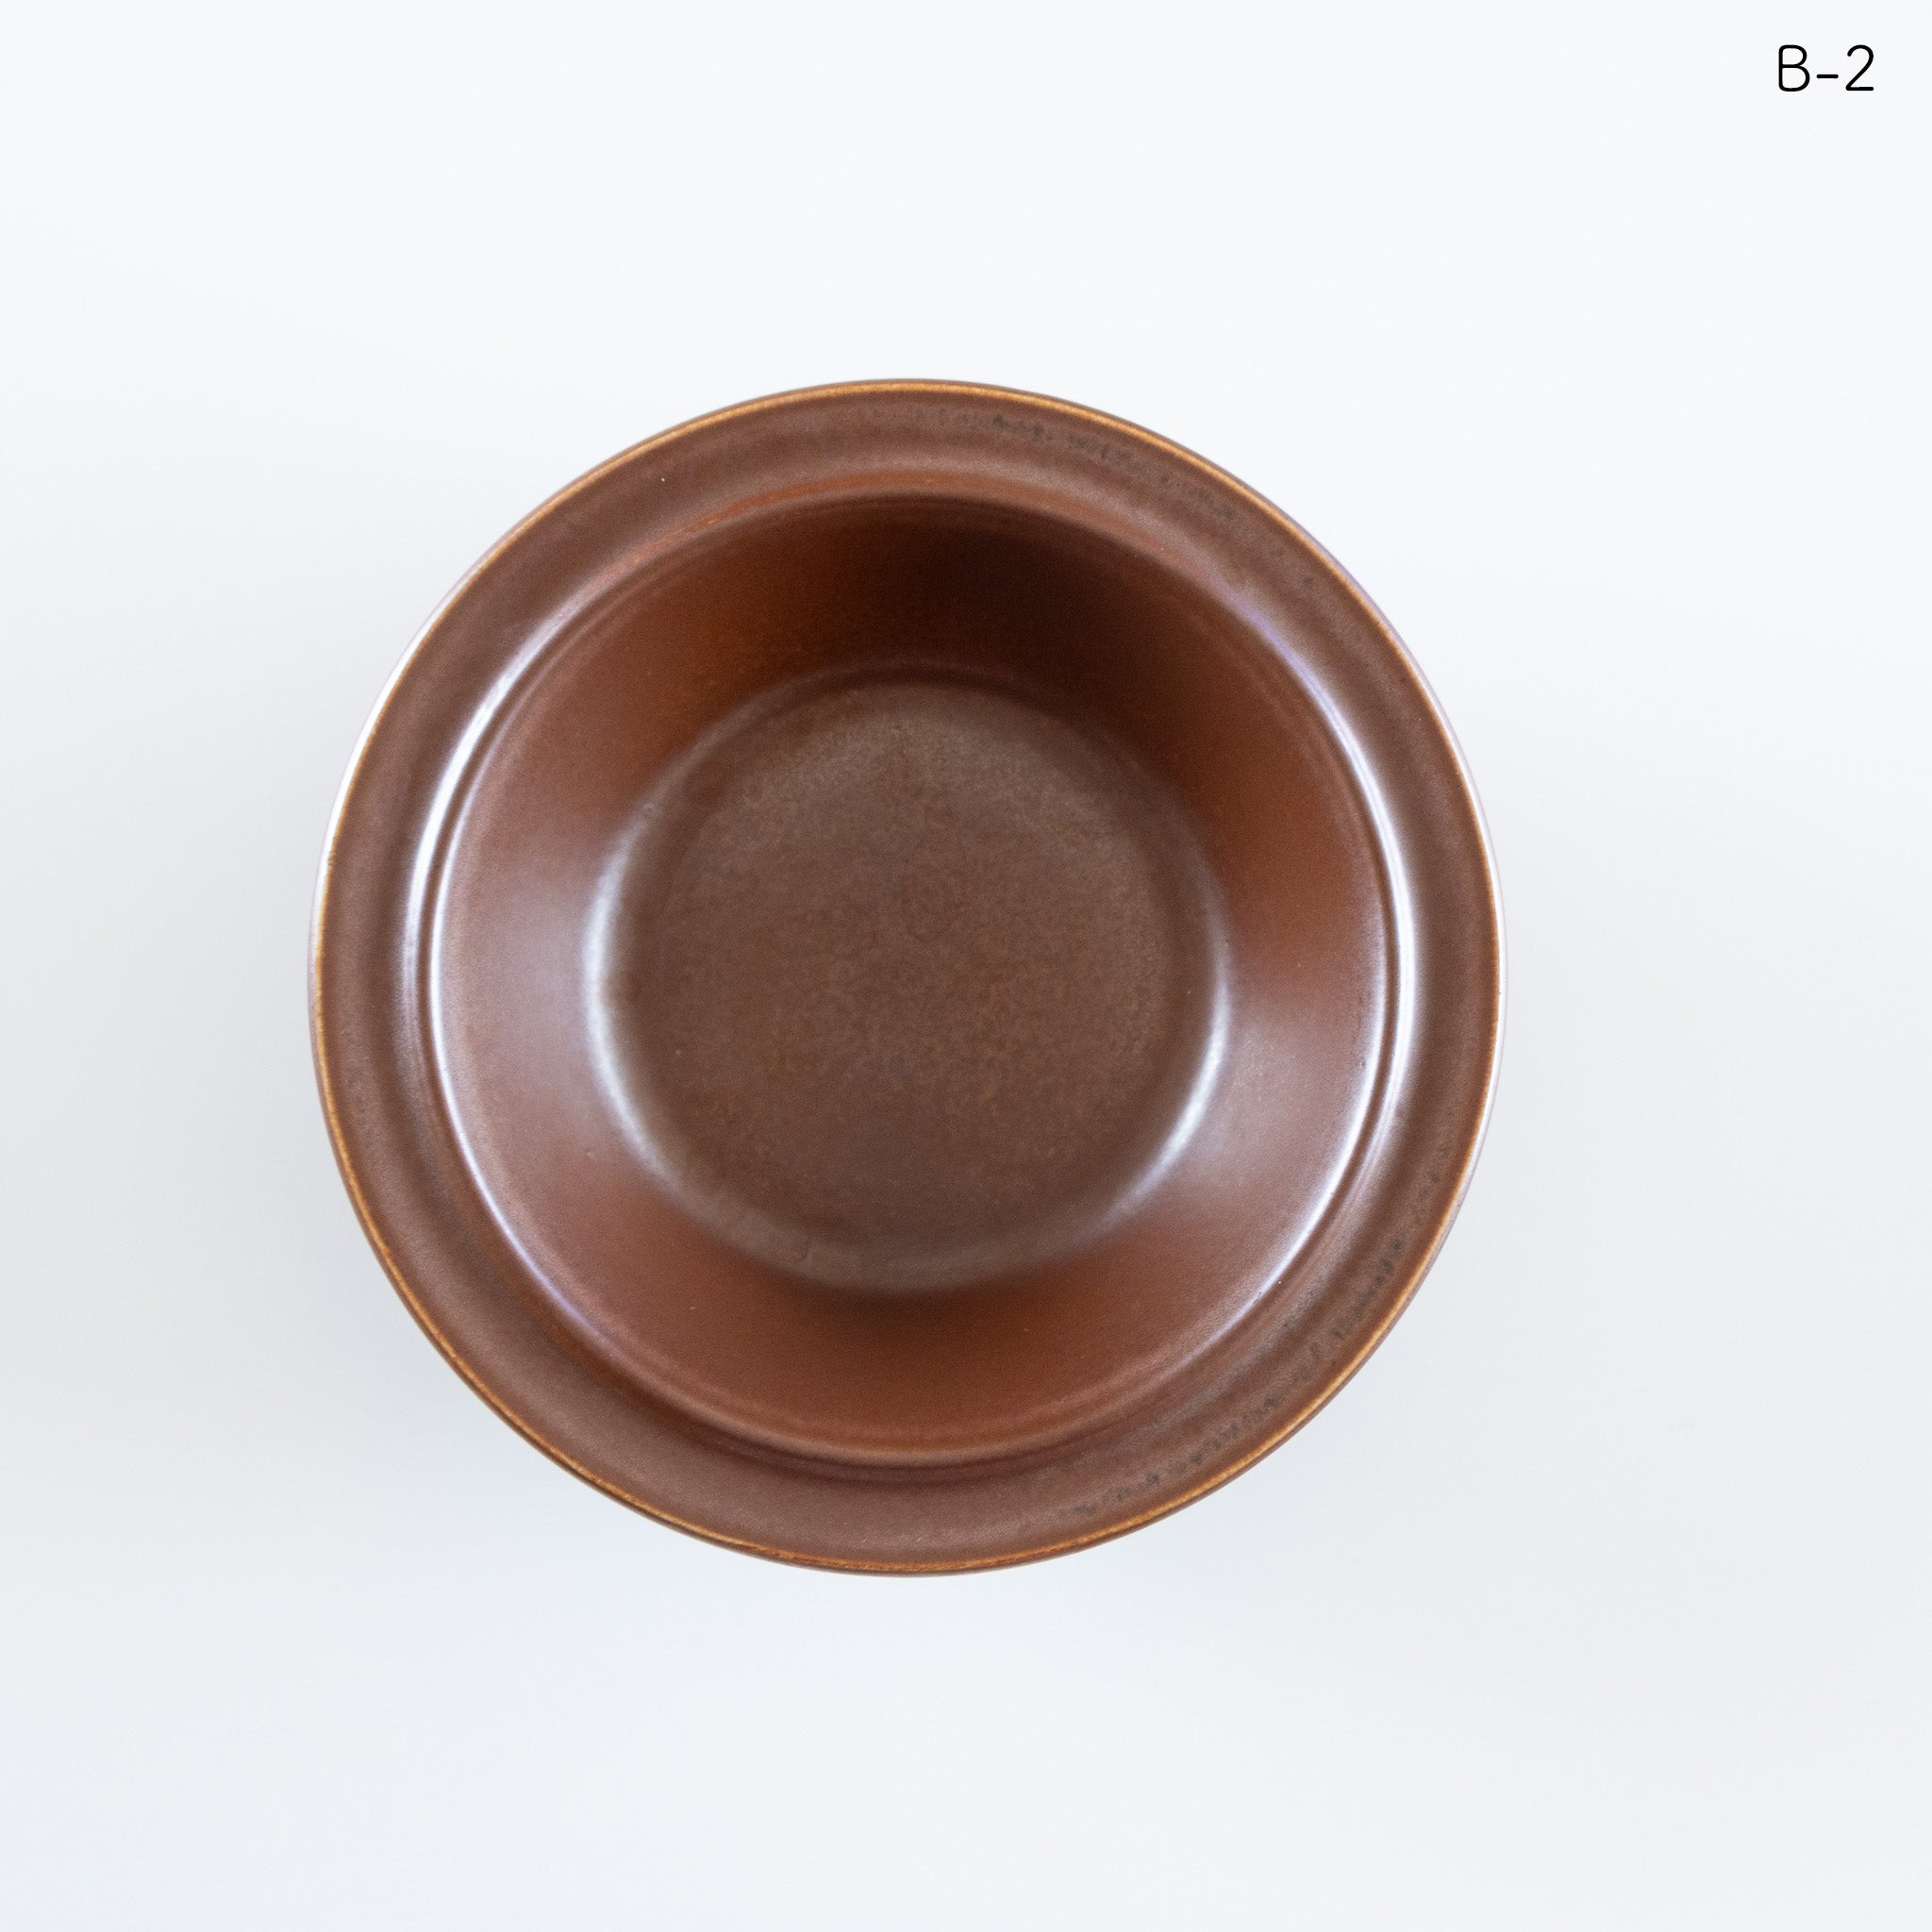 ruska (ルスカ) bowl 17.5cm / arabia (アラビア)